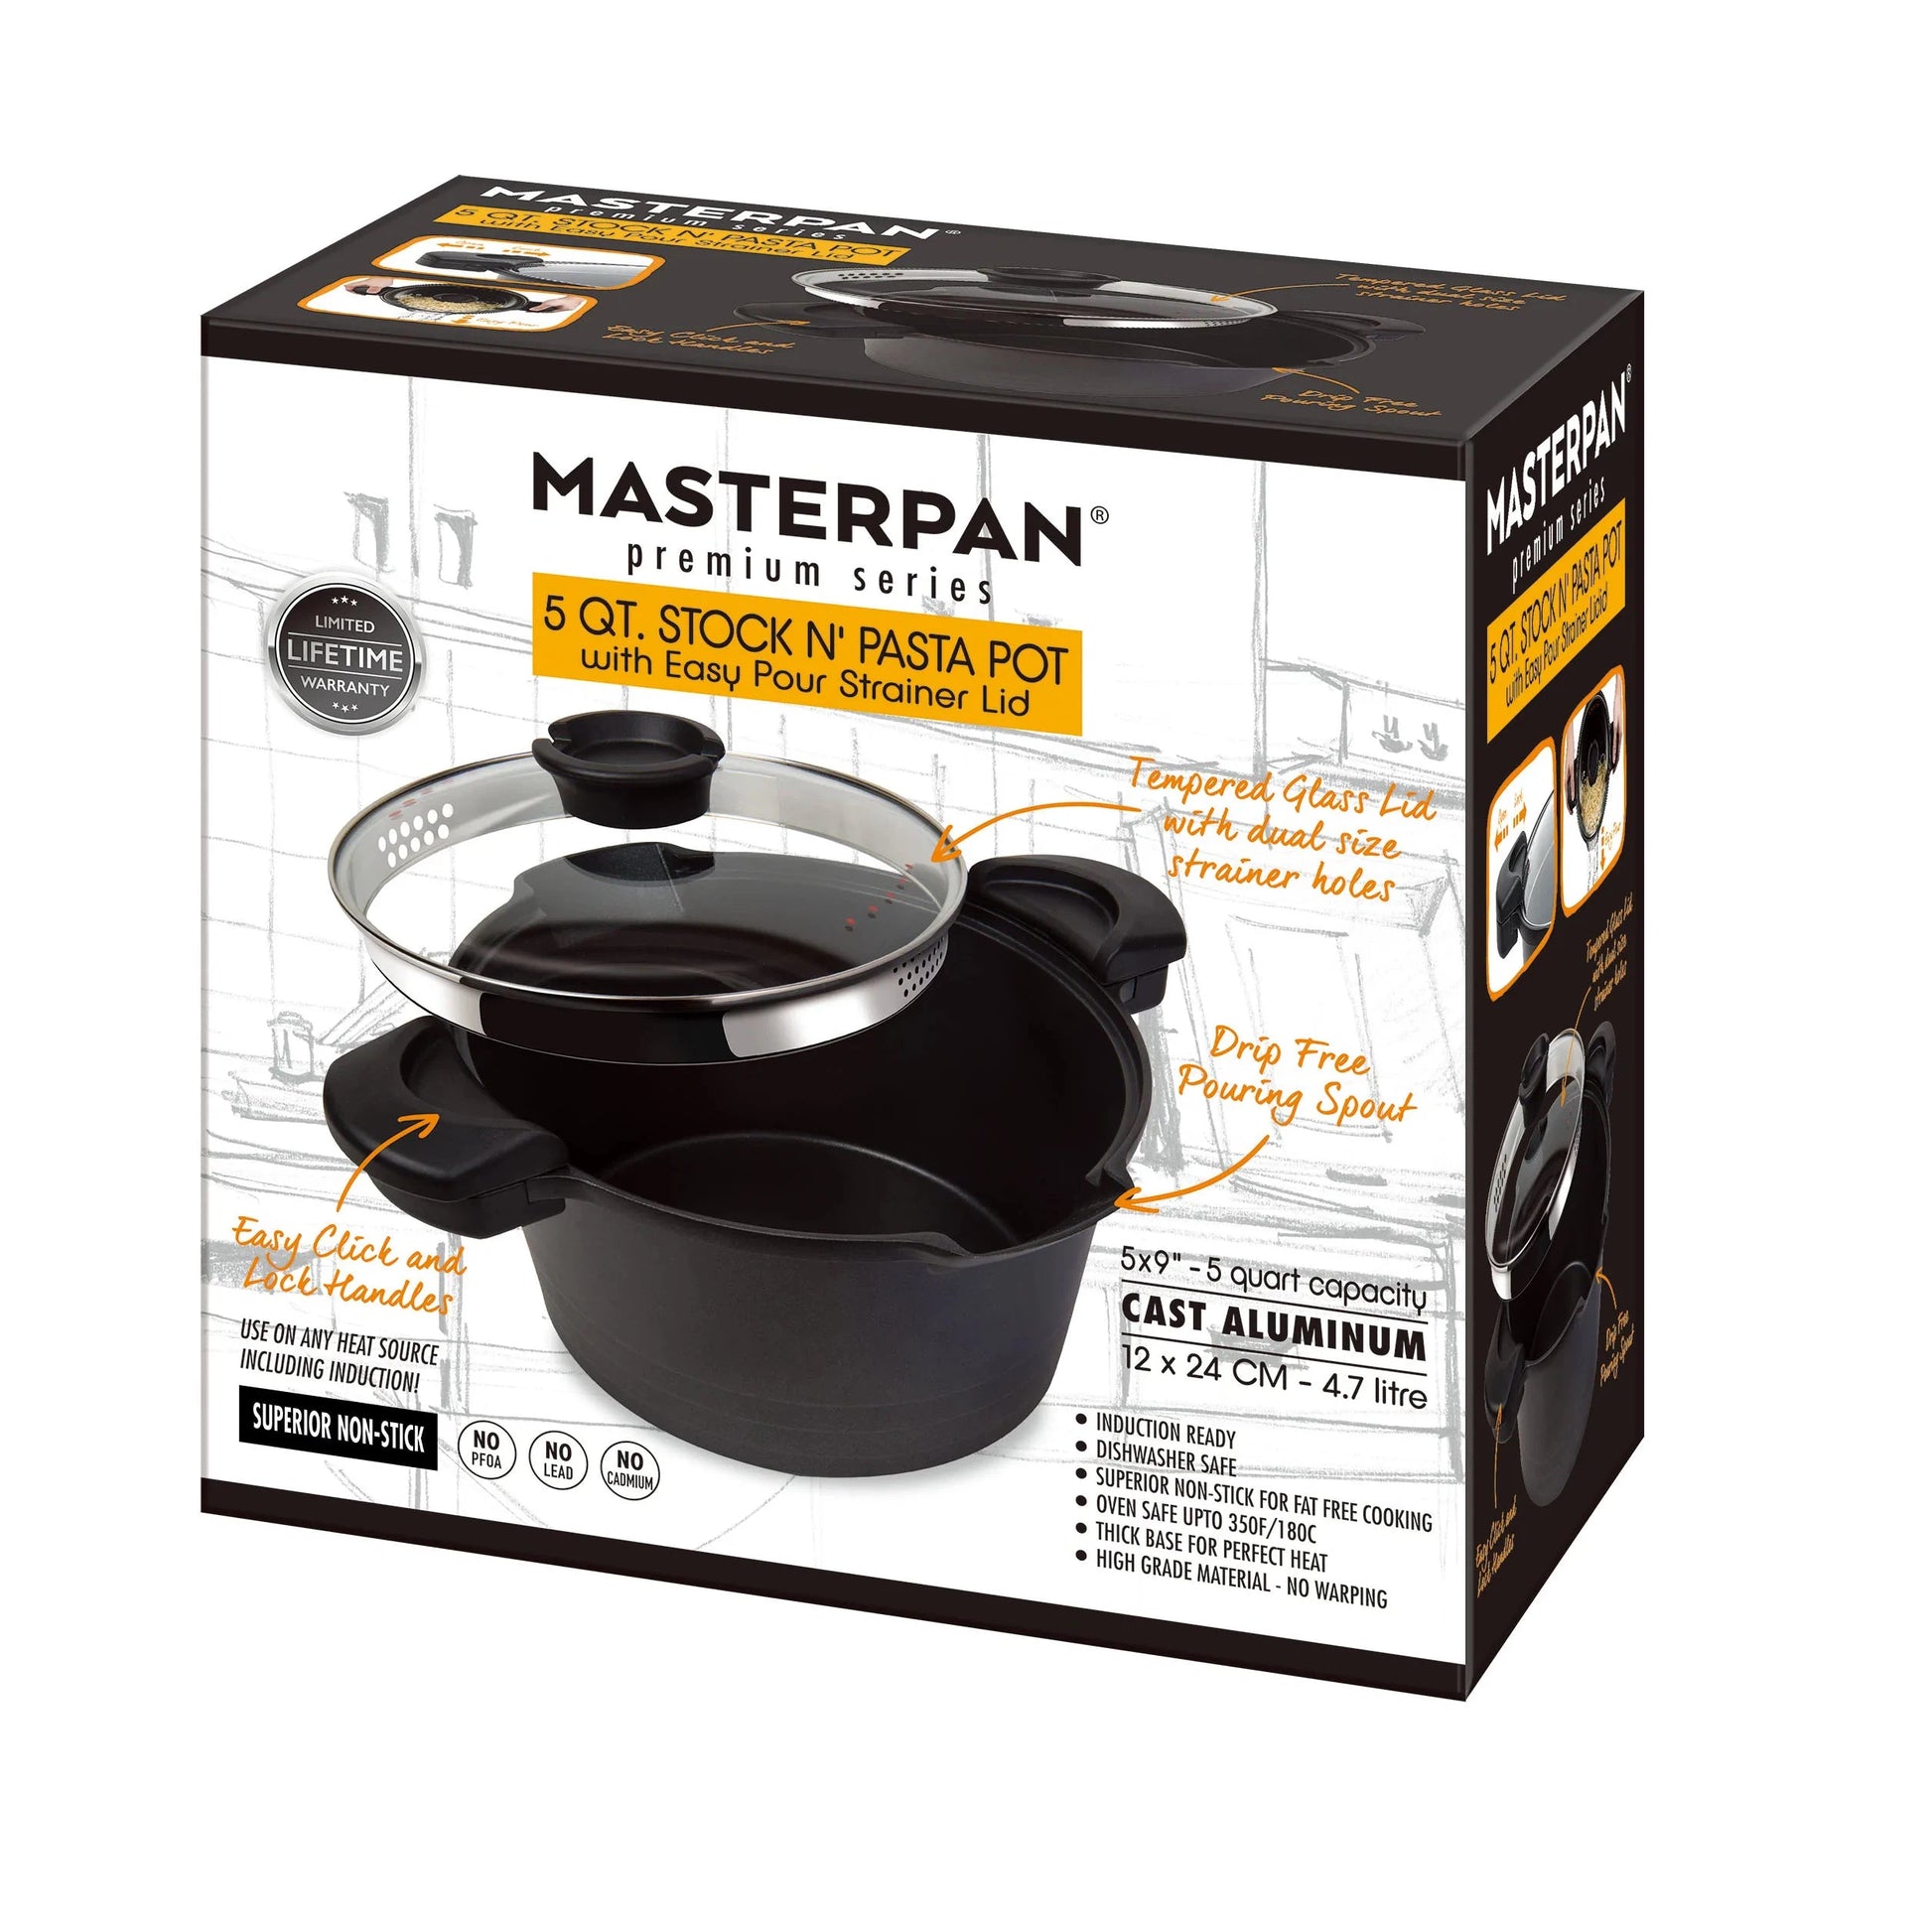 8 Qt Lock-n-Drain Stainless Steel Pasta Cooker